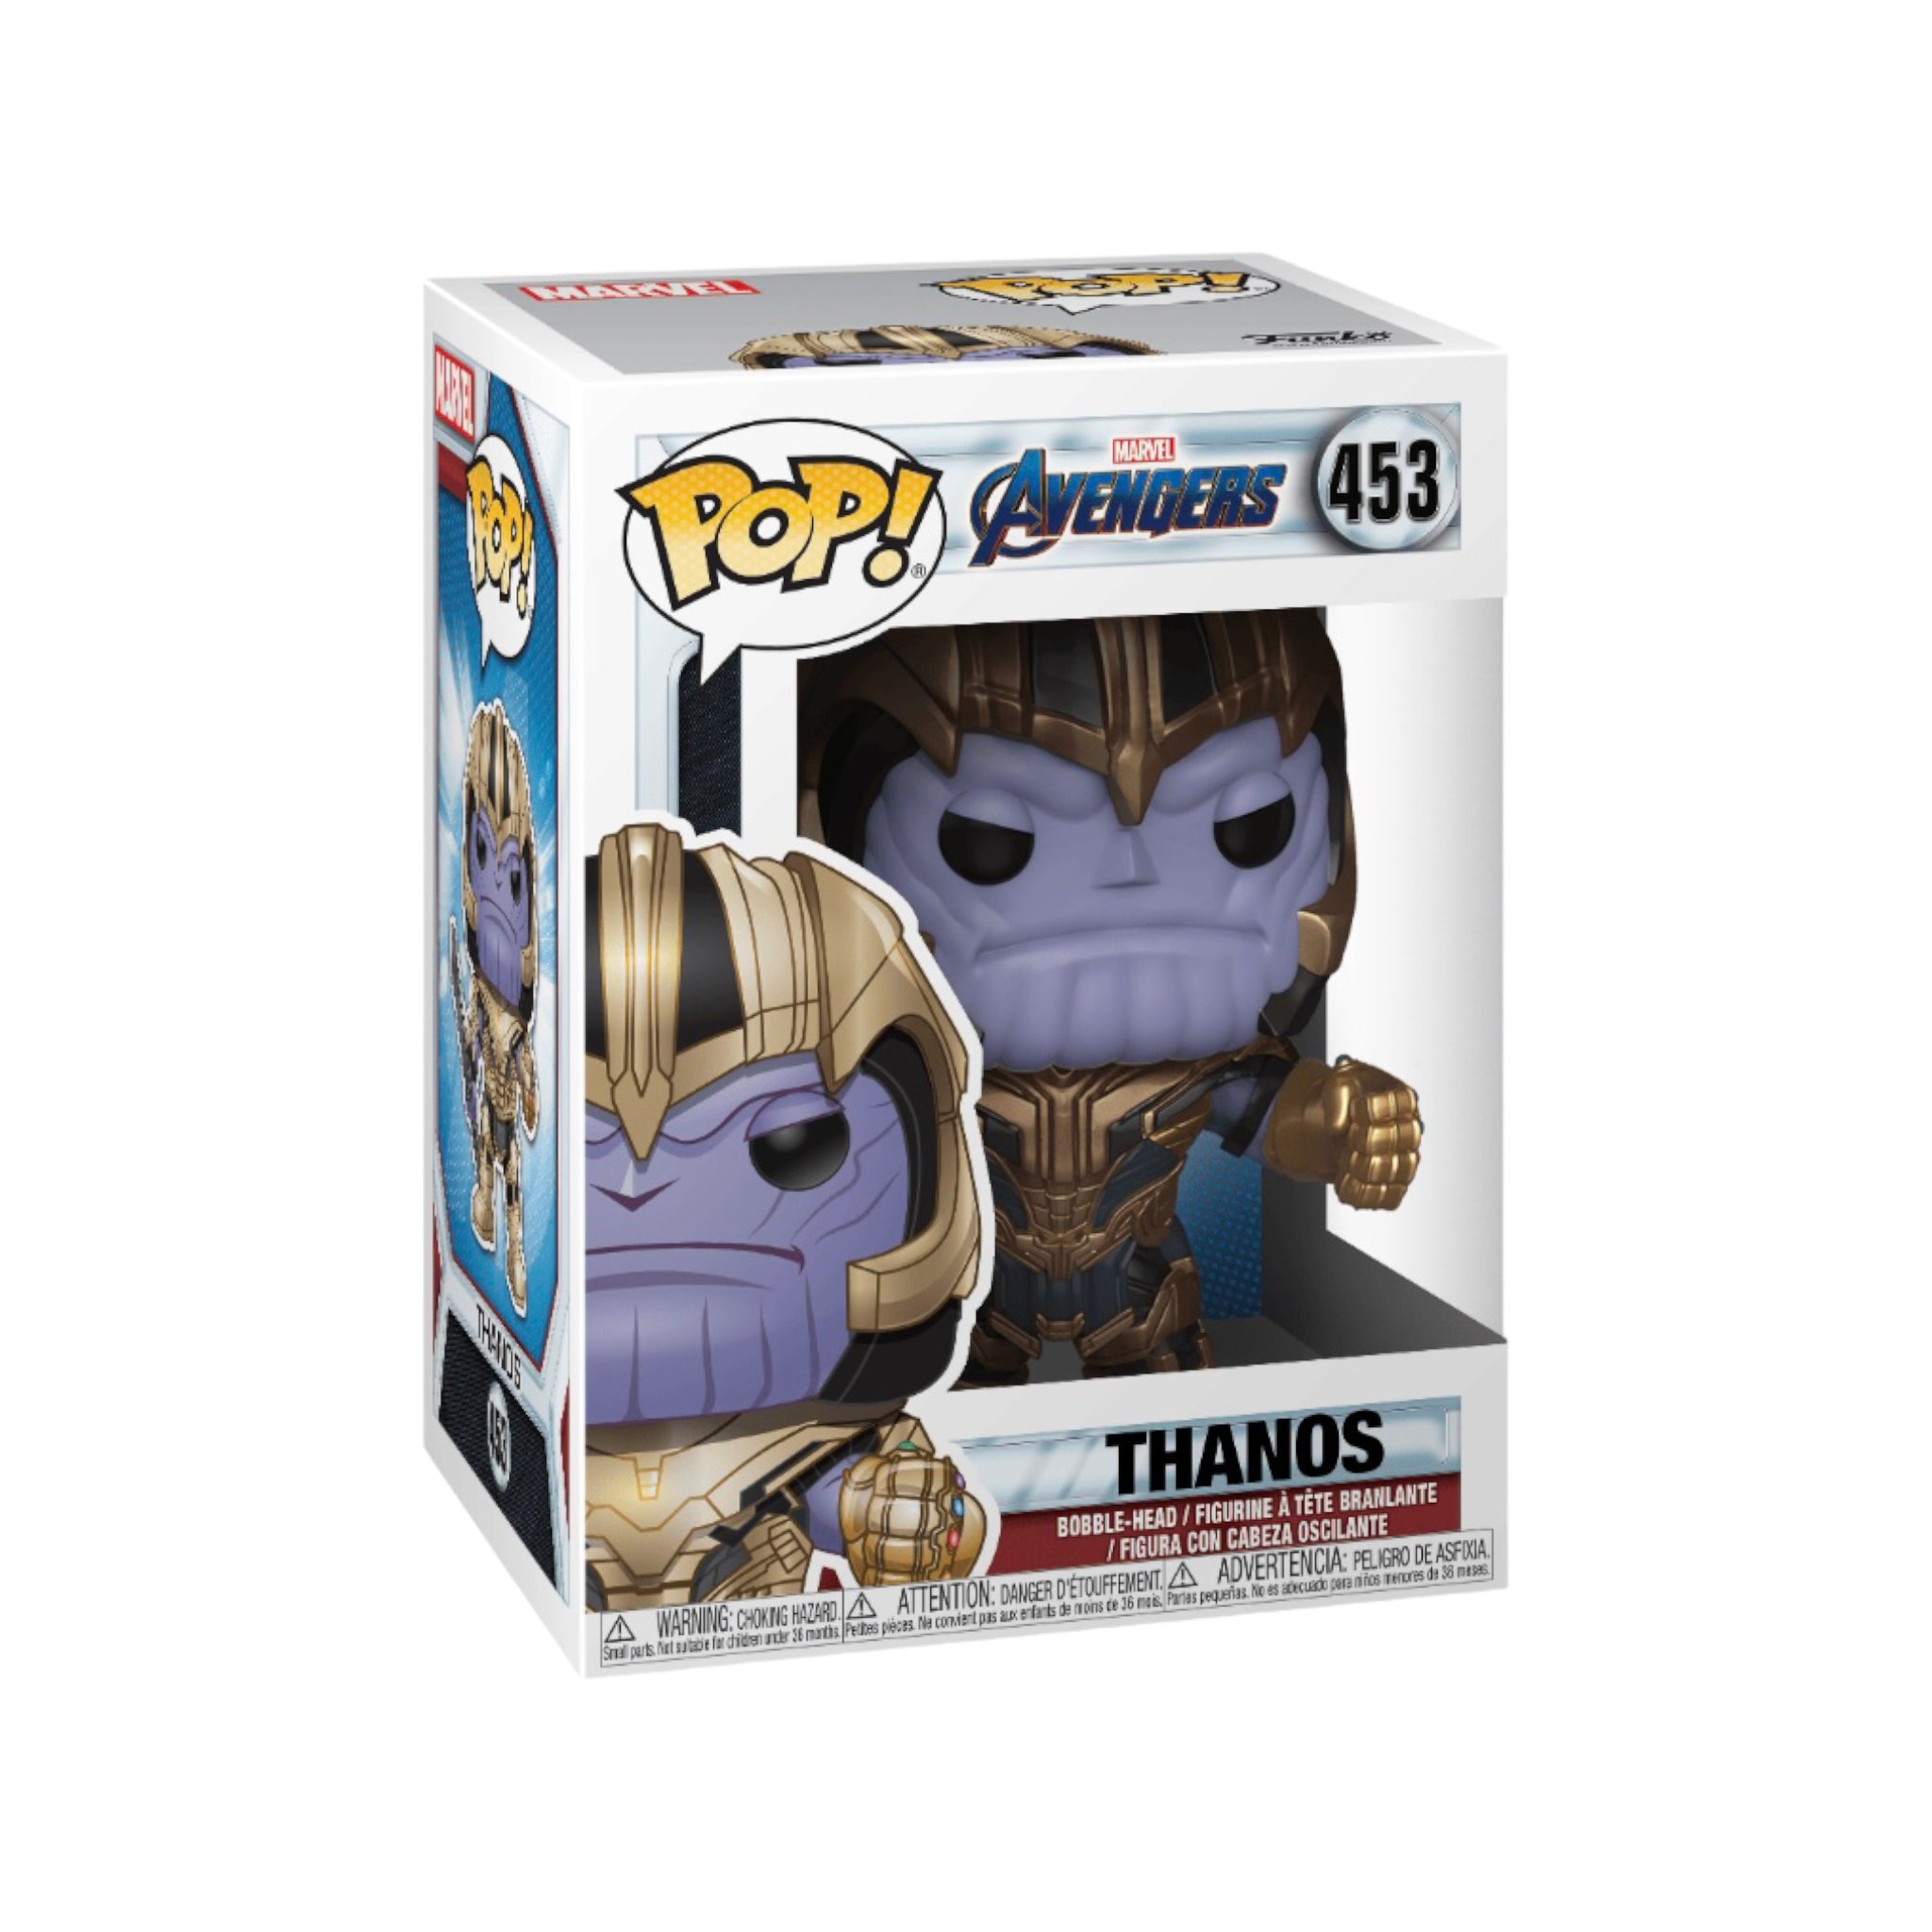 Thanos #453 Funko Pop! - Avengers: Endgame